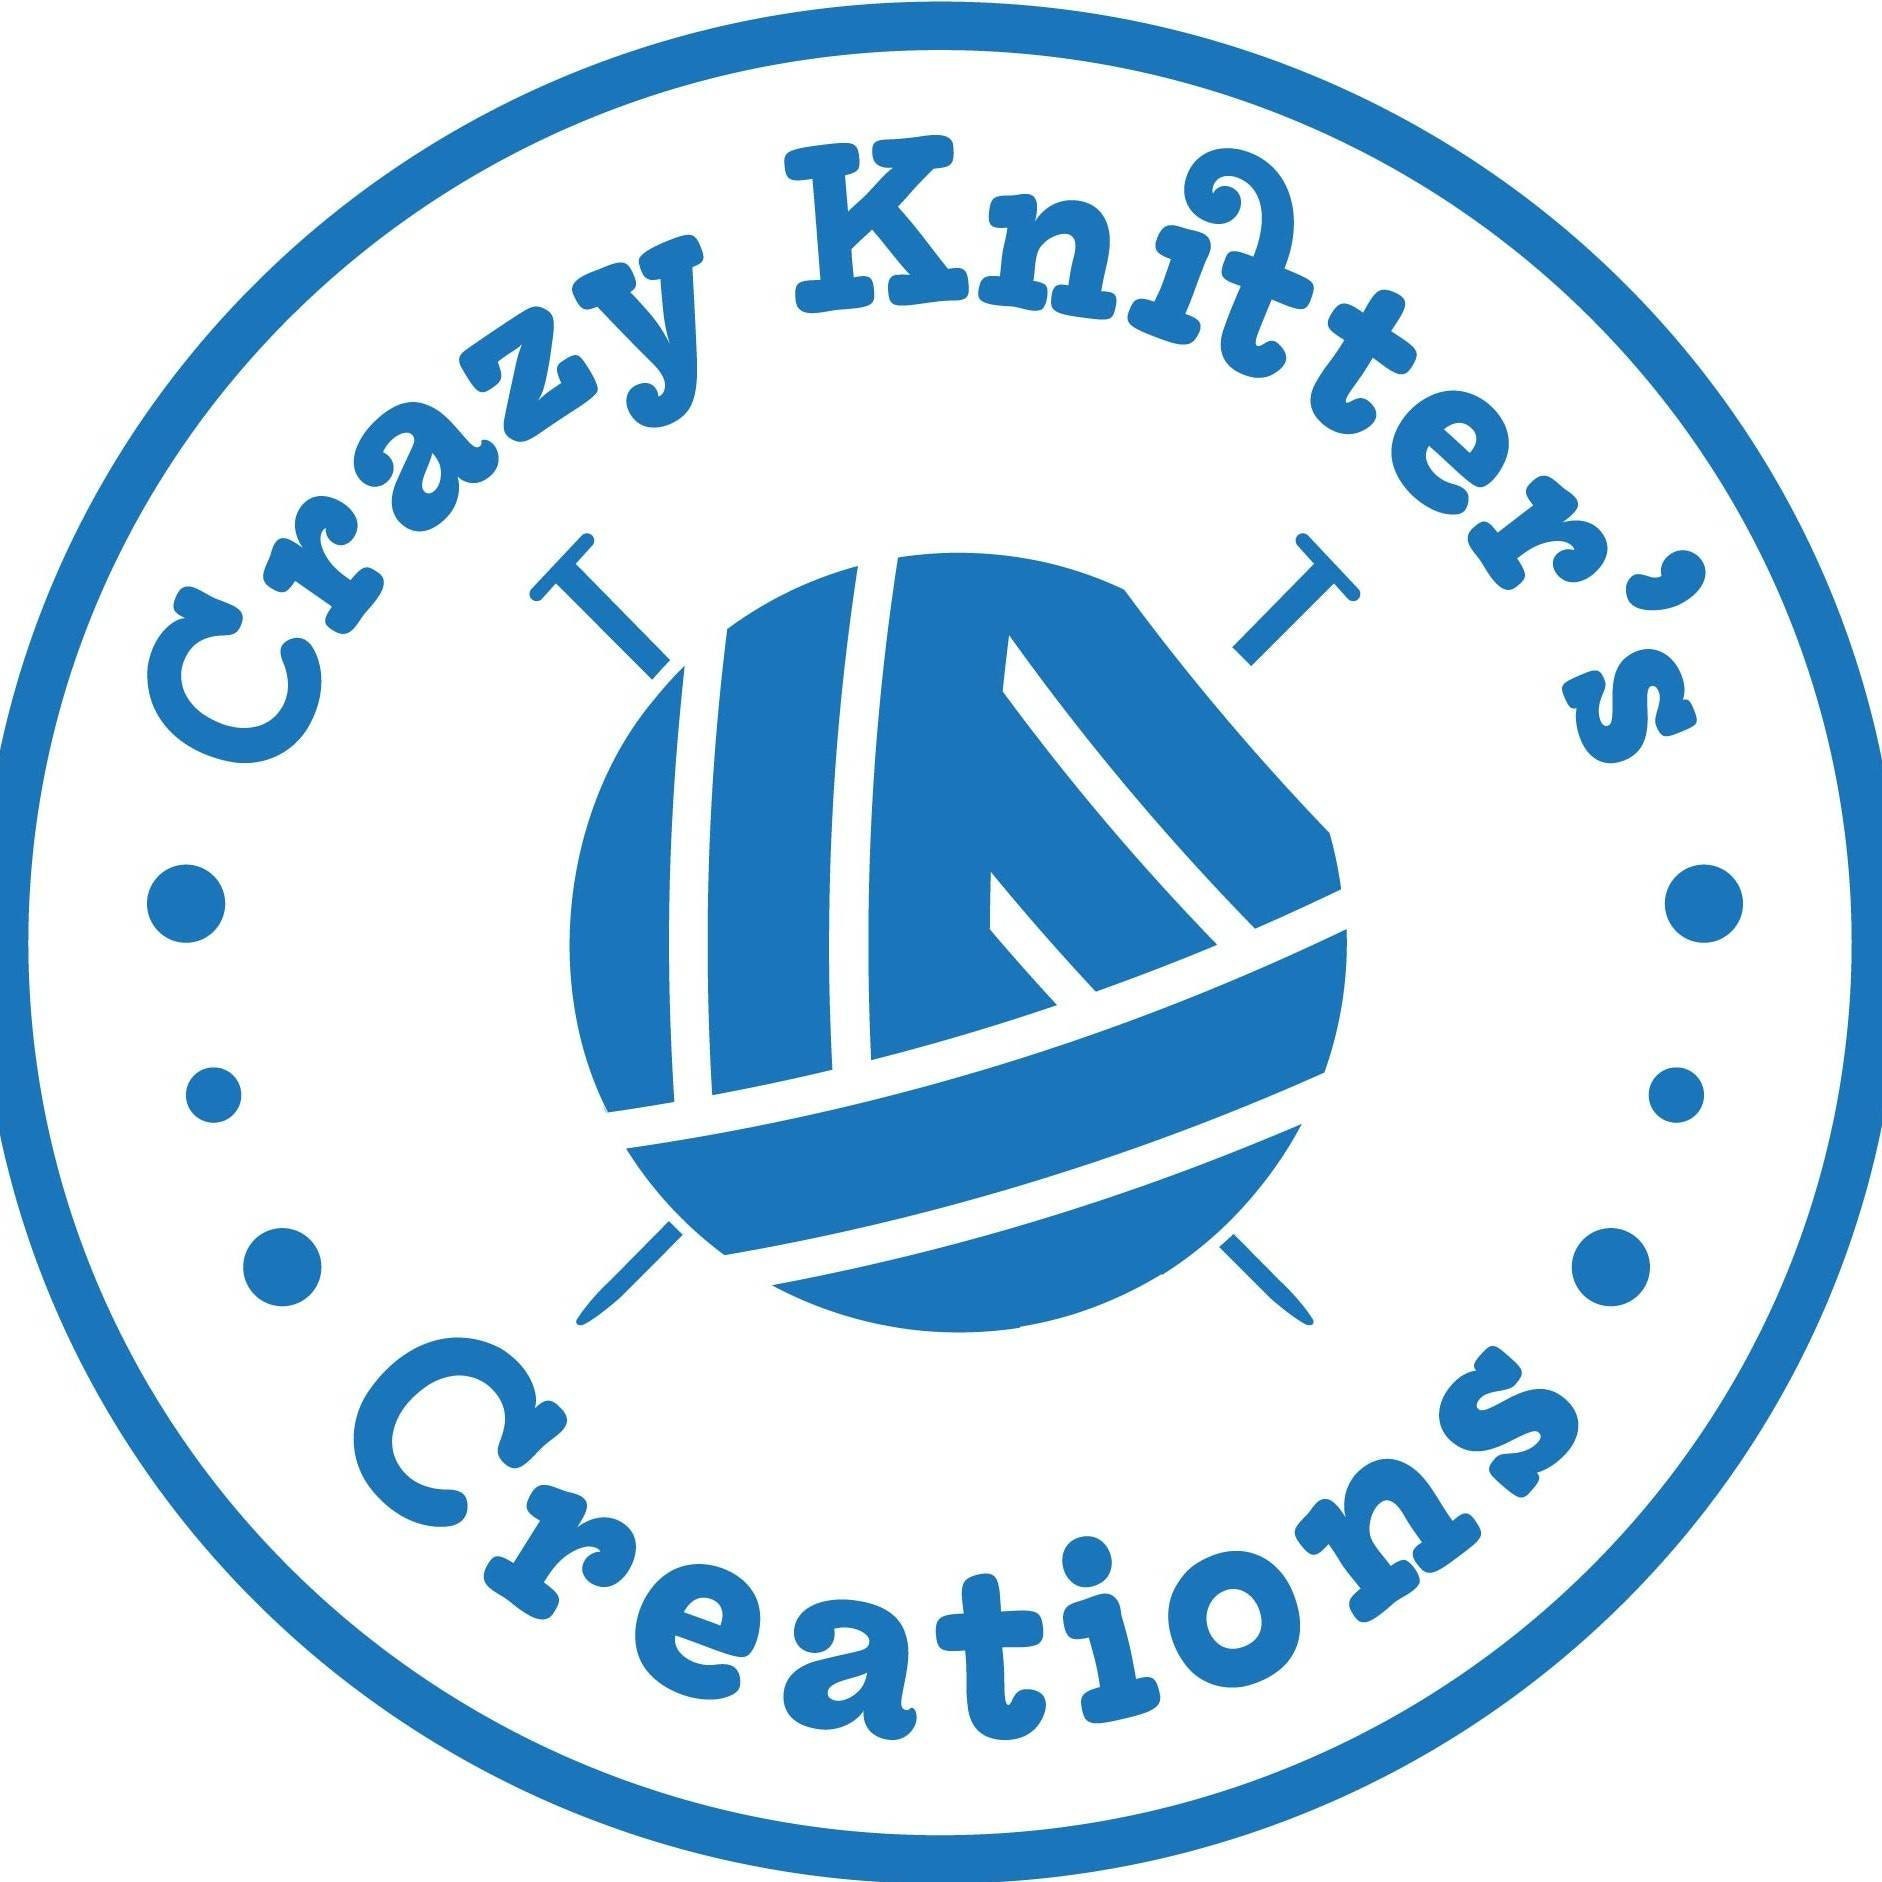 CrazyKnitterCreation